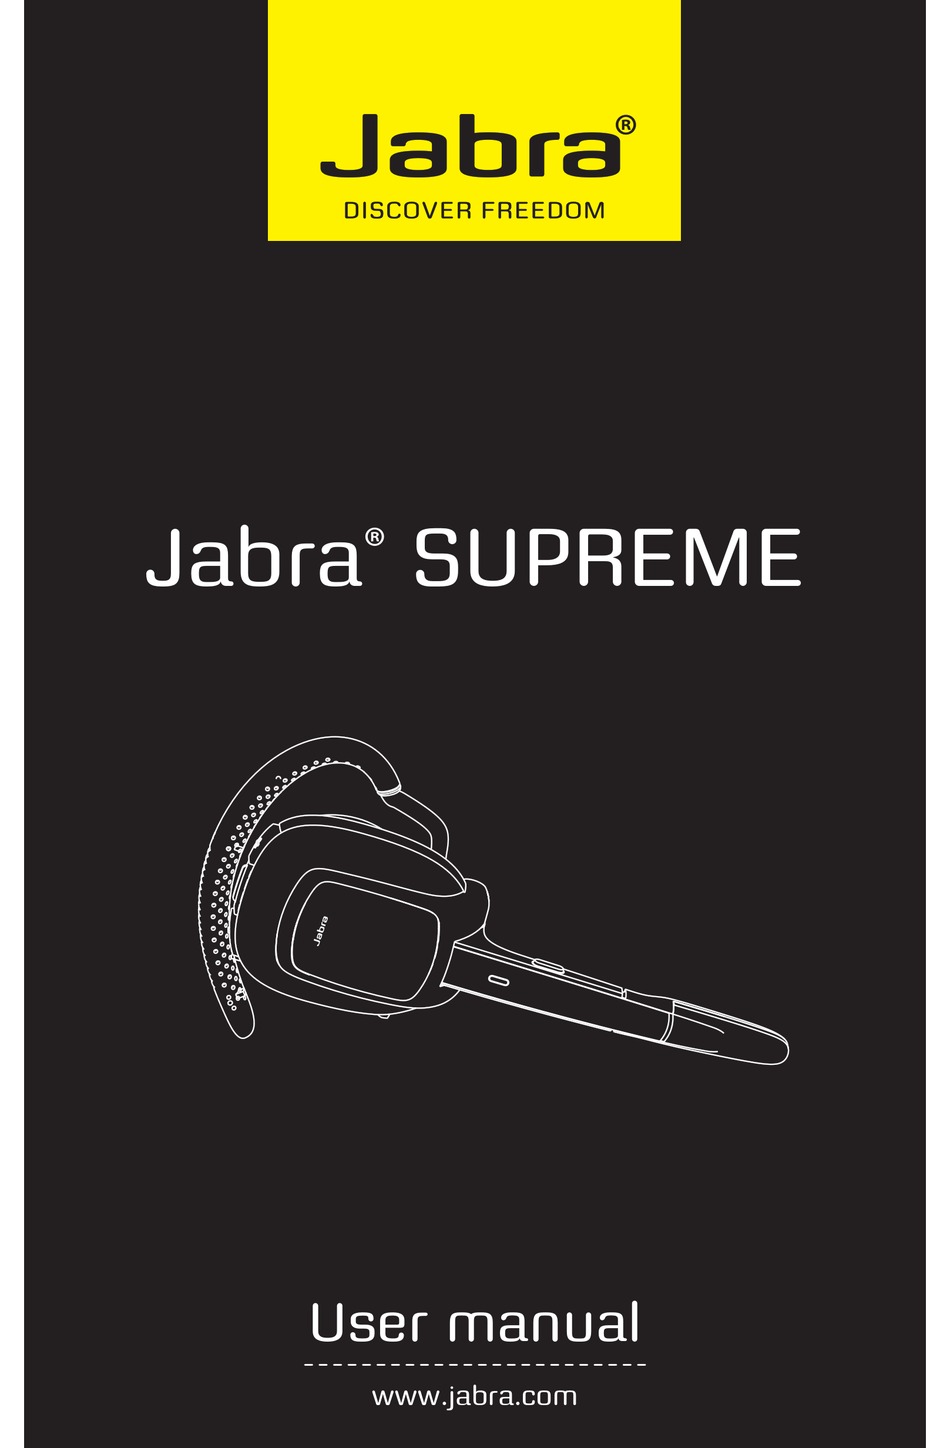 JABRA SUPREME USER MANUAL Pdf Download | ManualsLib